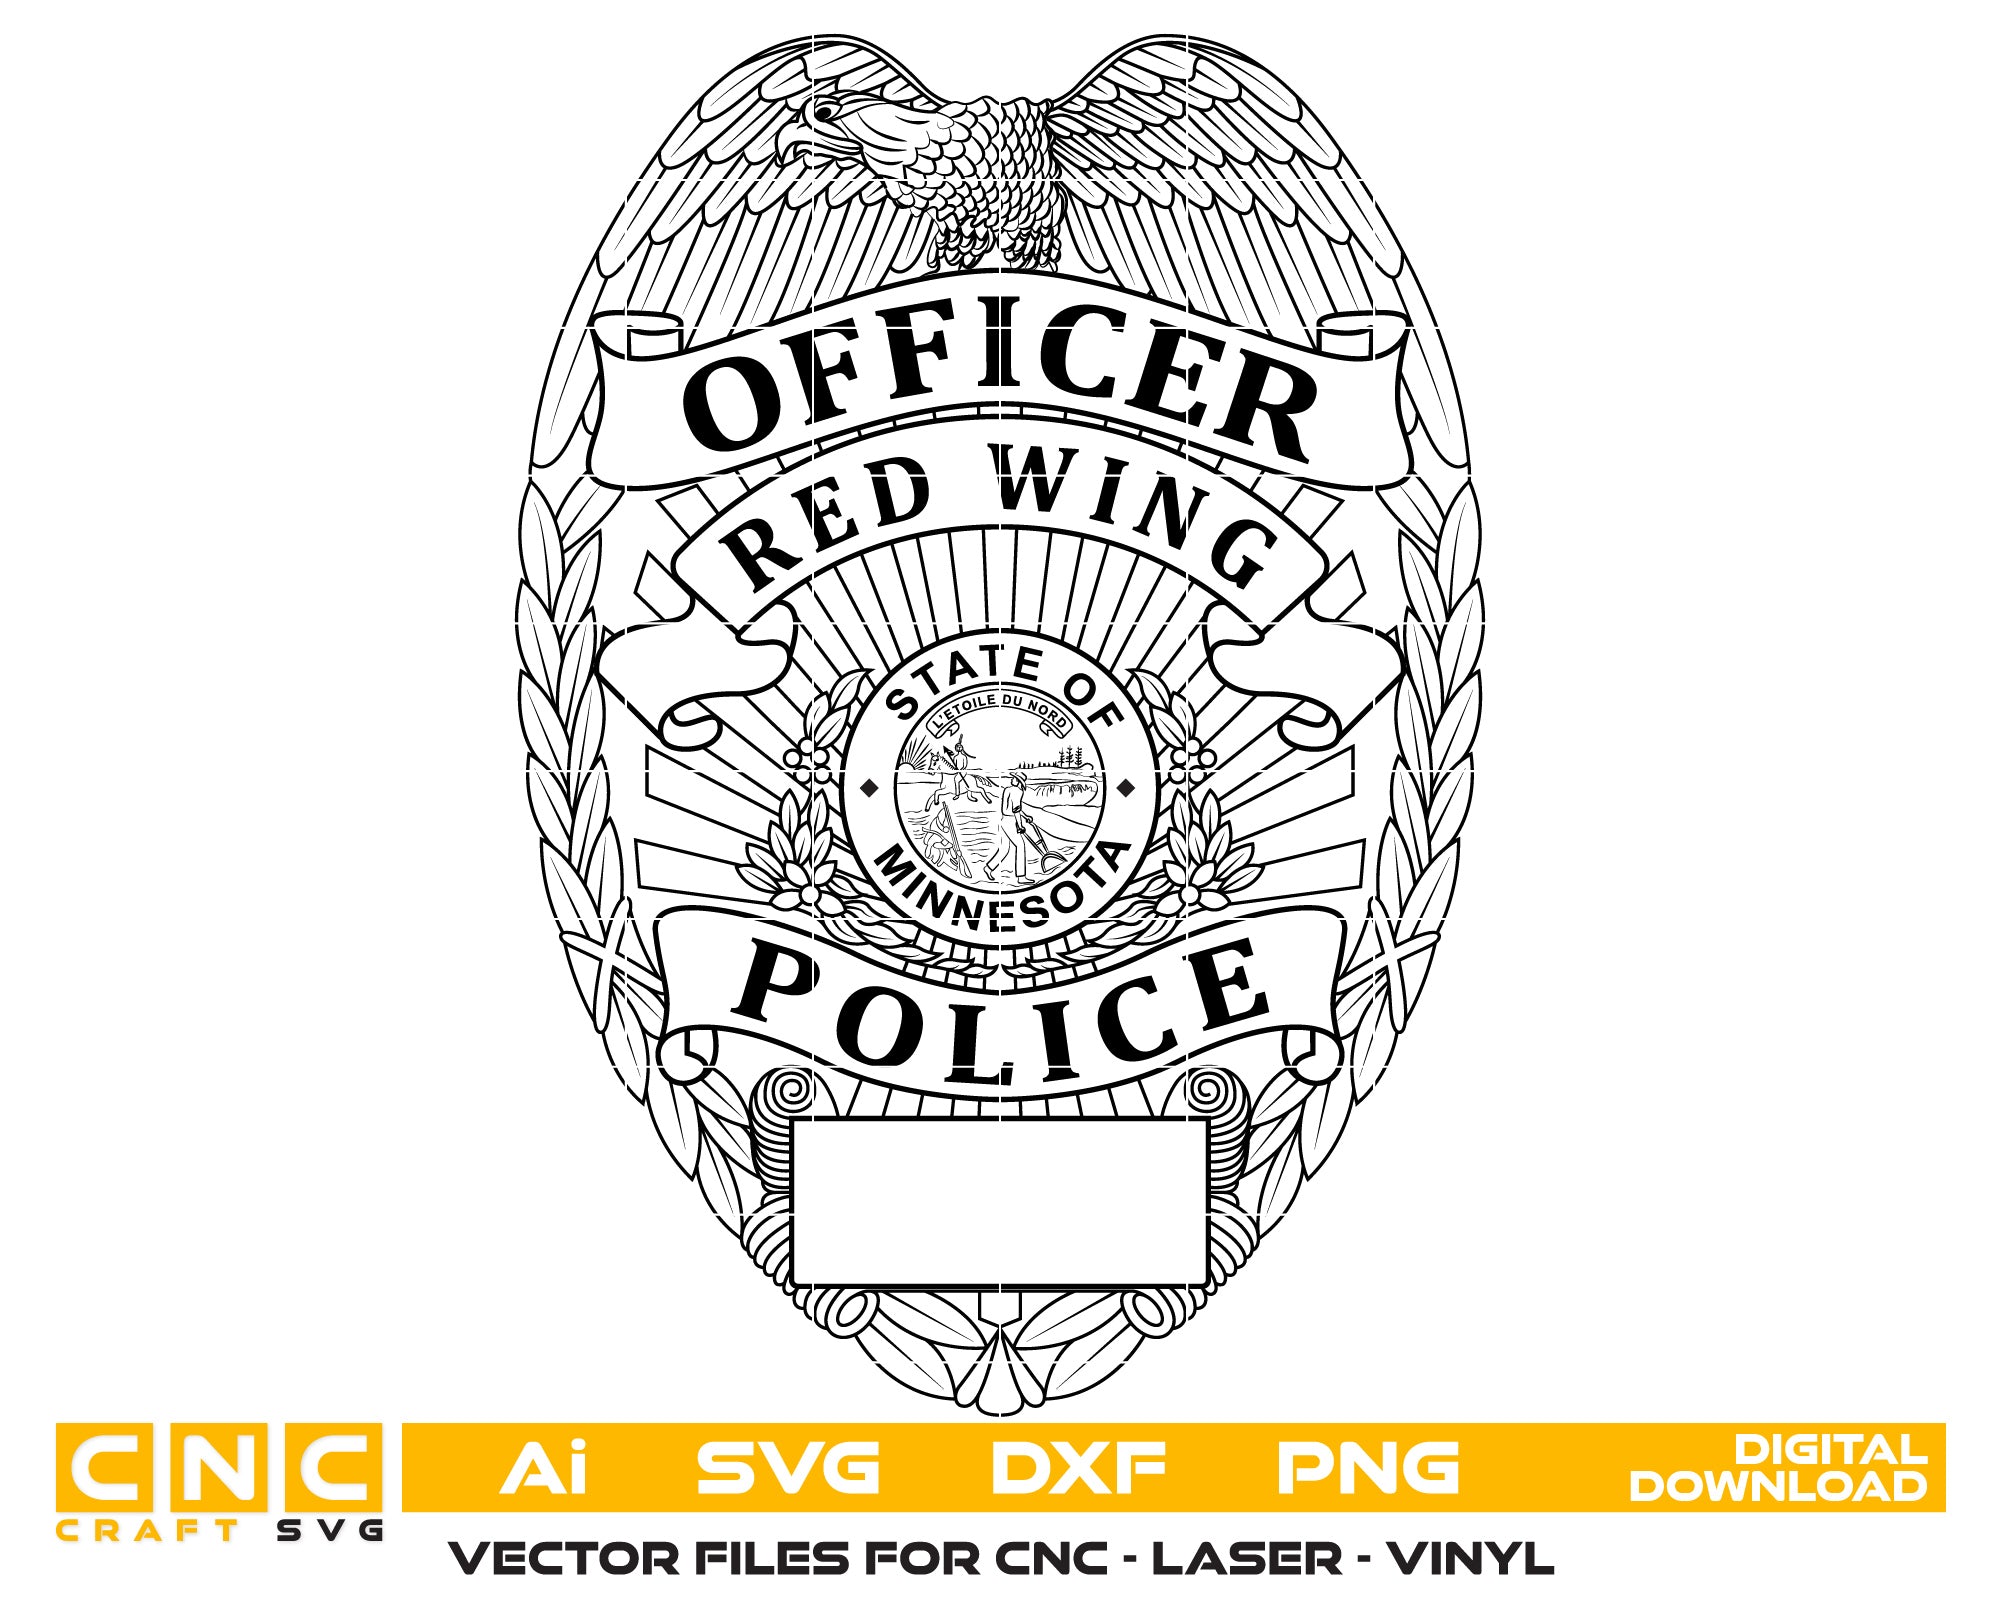 Minnesota Red Wing Police Officer Badge vector art